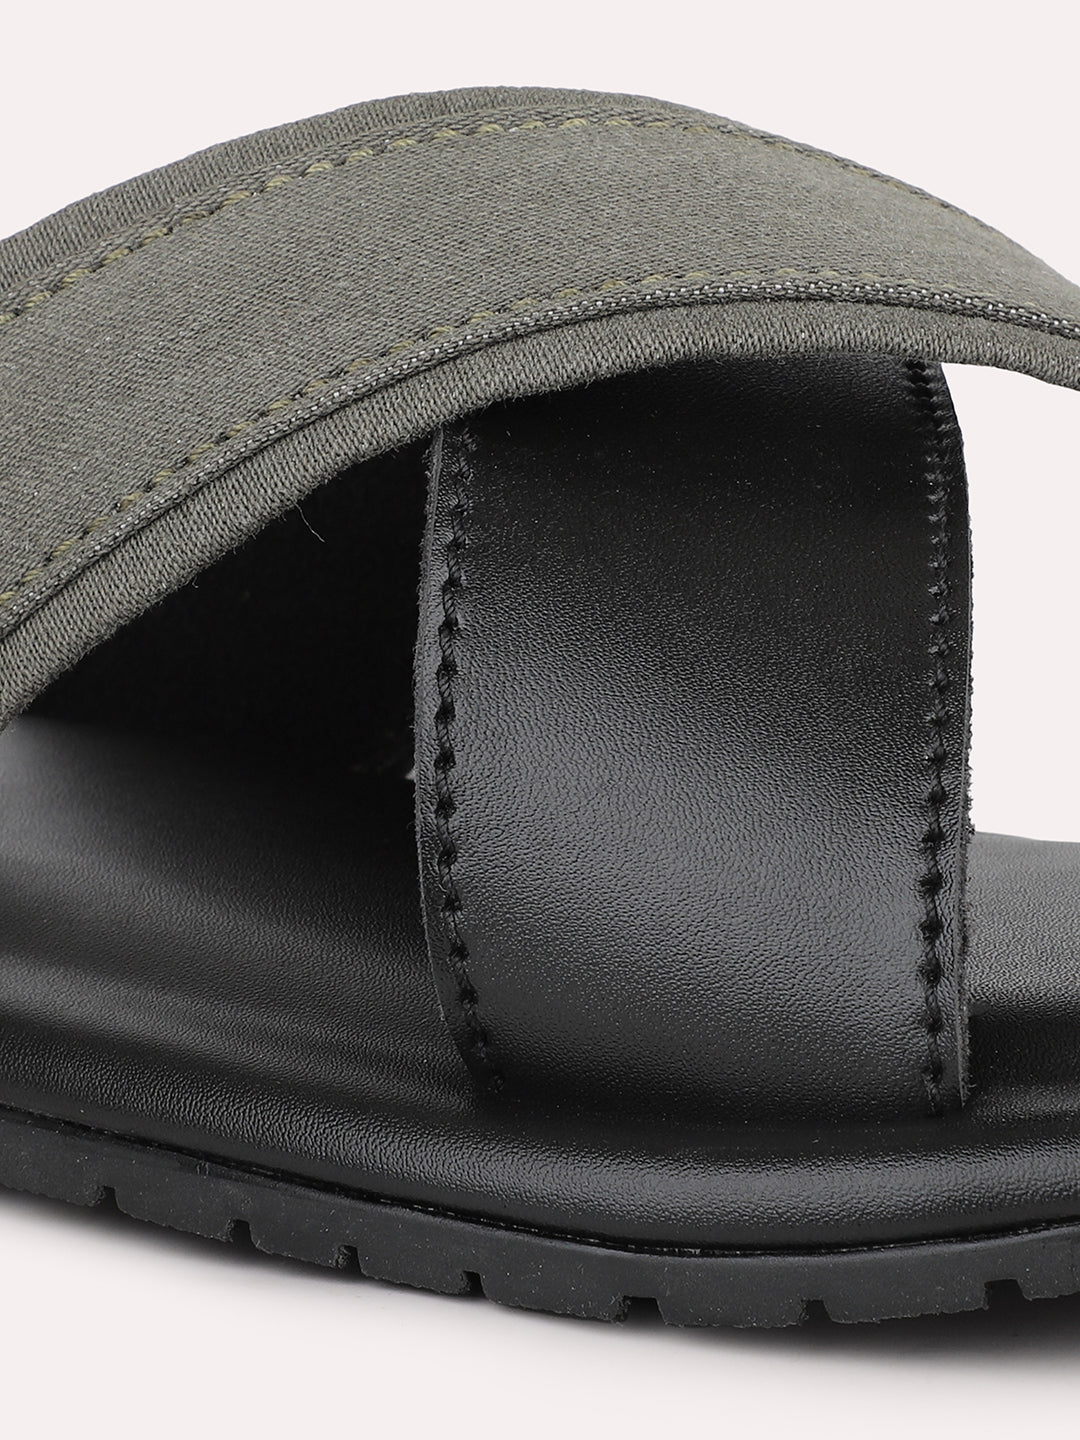 Privo Grey Denim and Black Casual Sandals For Men